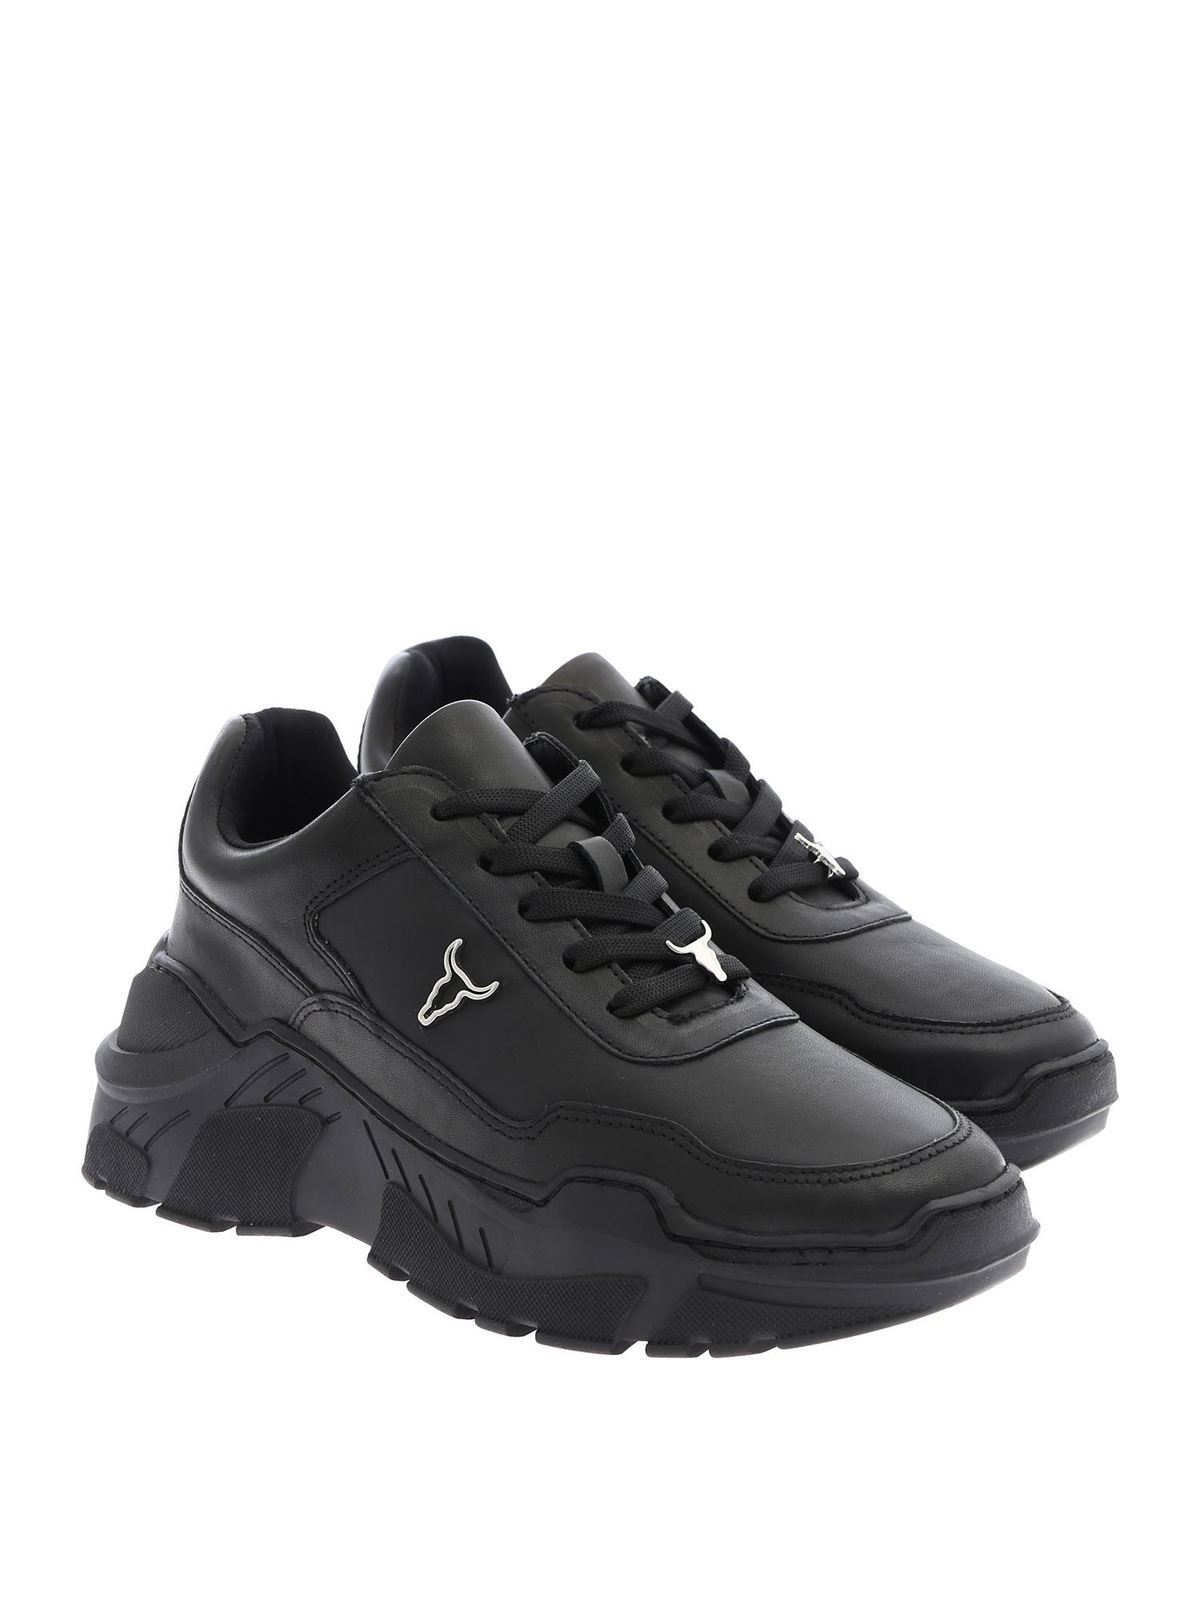 windsor smith black sneakers